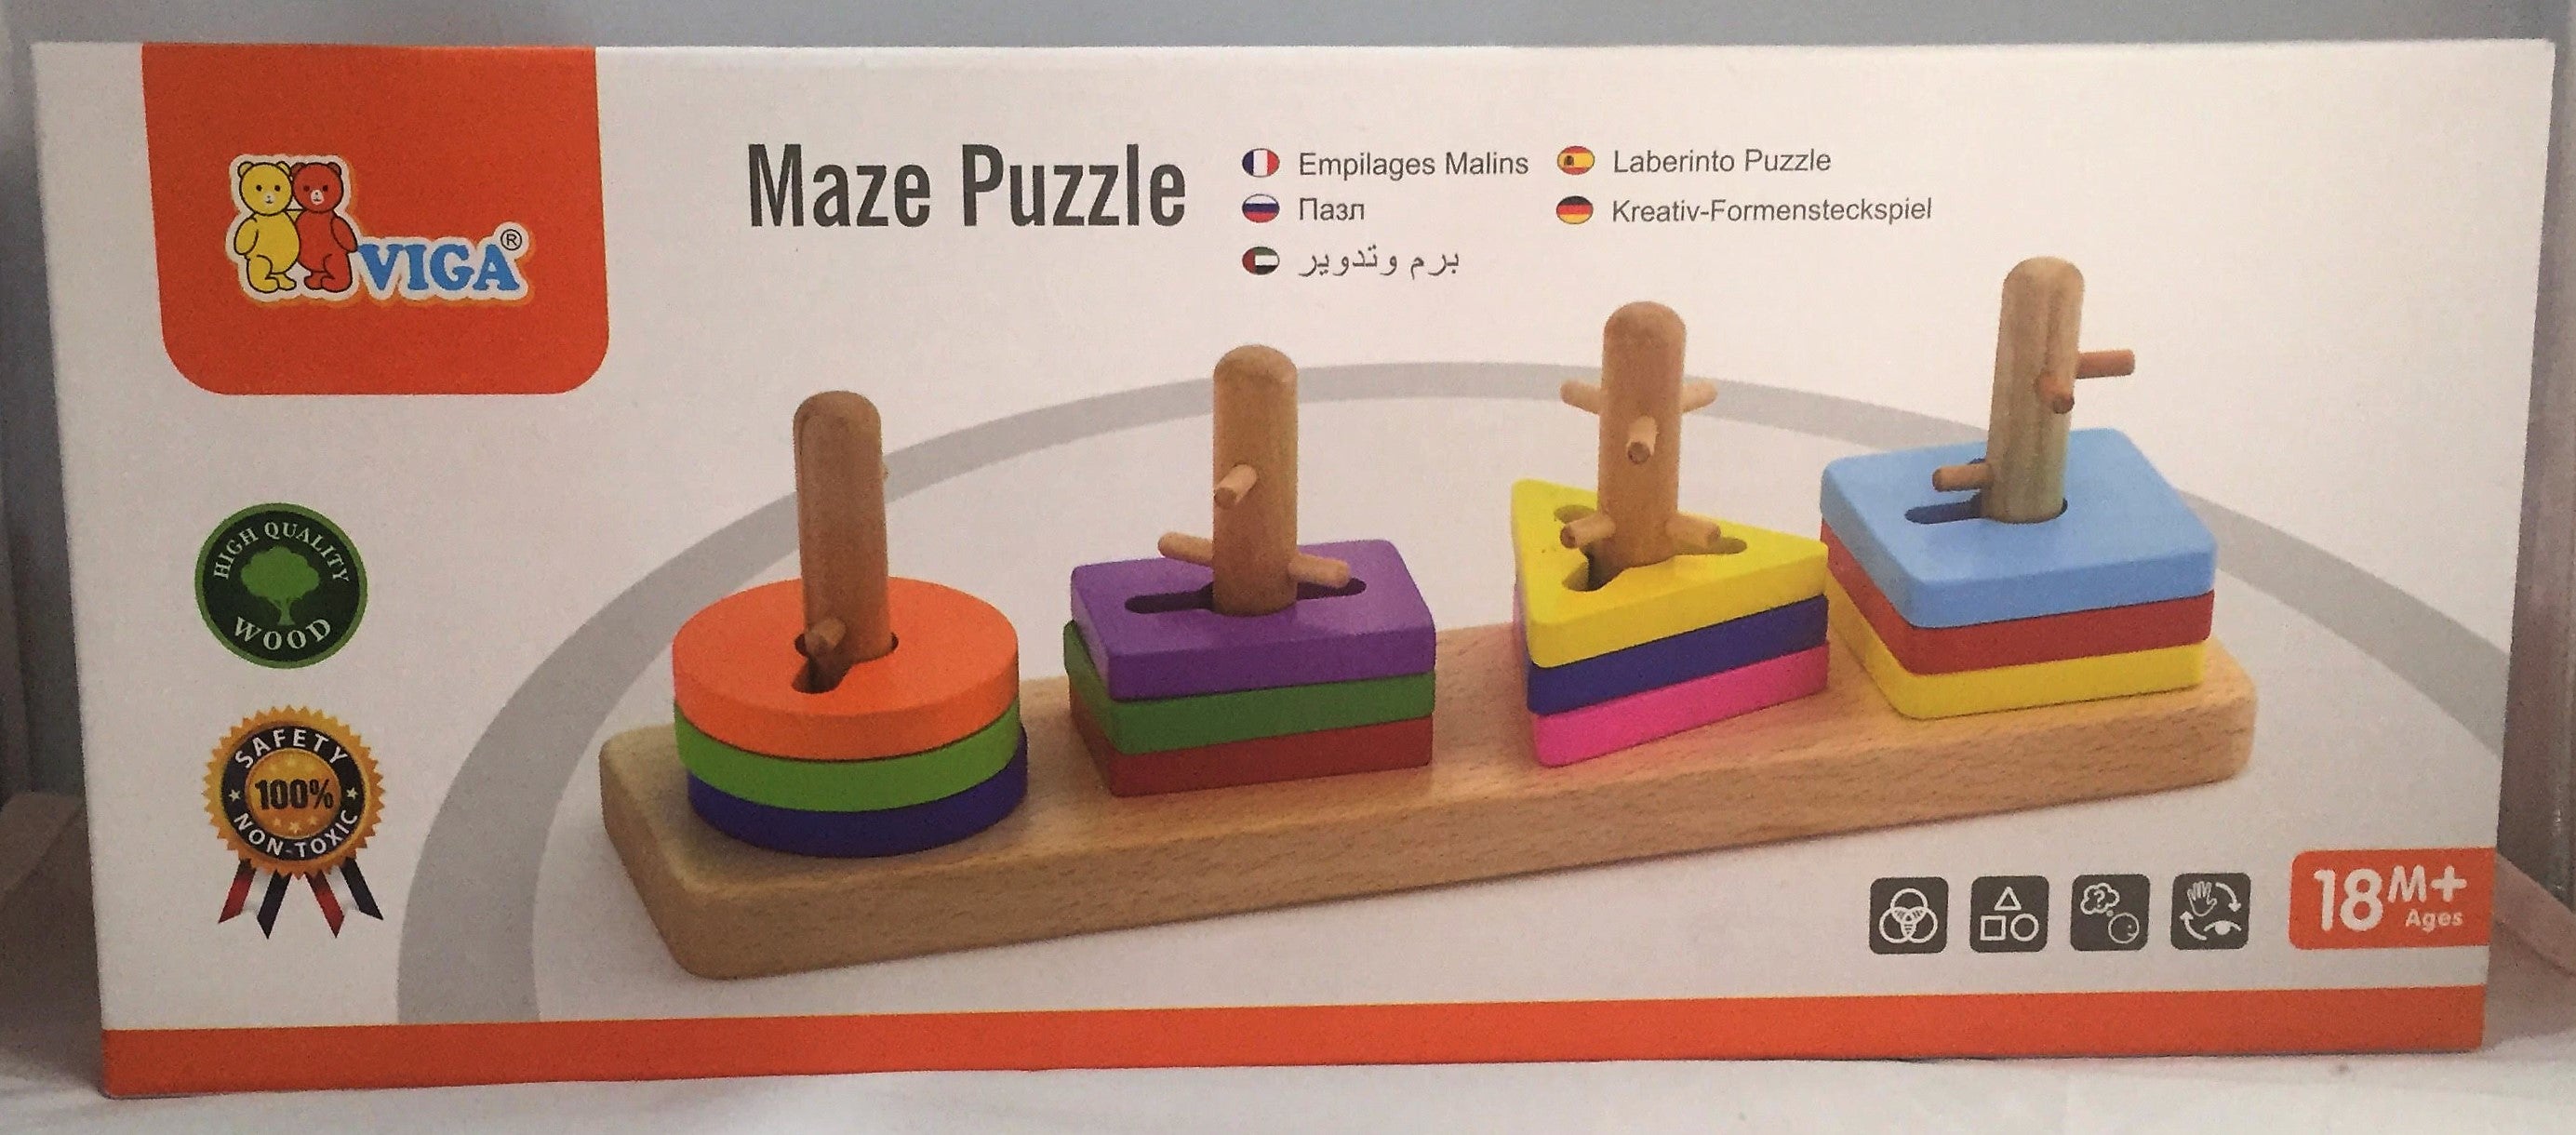 Viga Toys Maze Puzzle Image